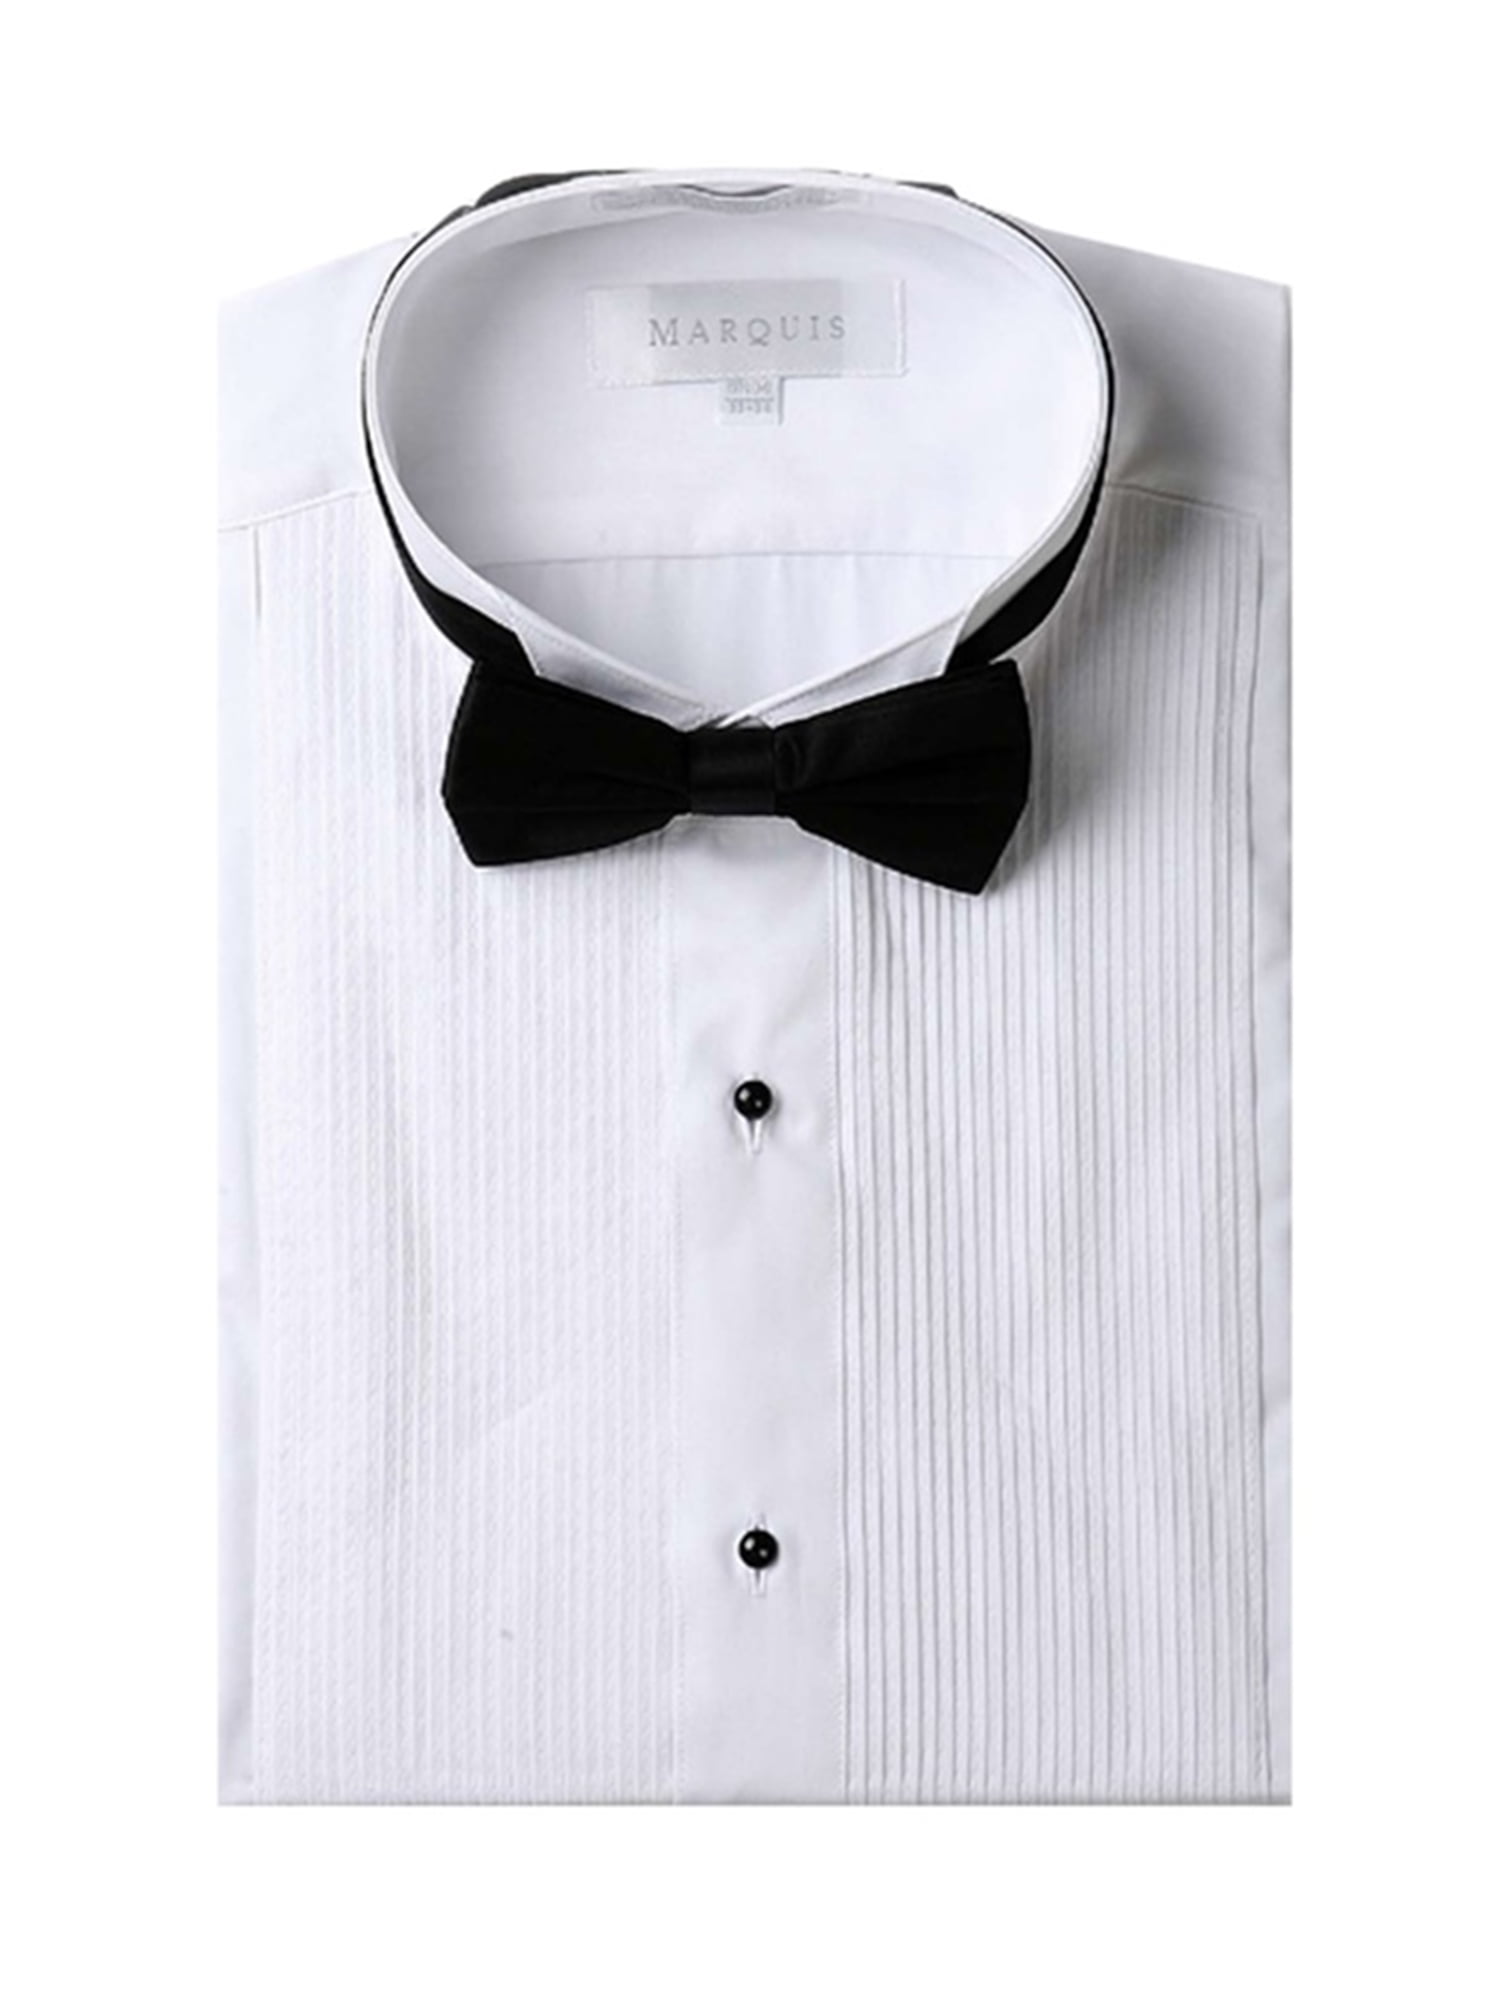 New Berlioni Italy Men's Premium Tuxedo Dress Shirt Wingtip Collar Bow-Tie Black 